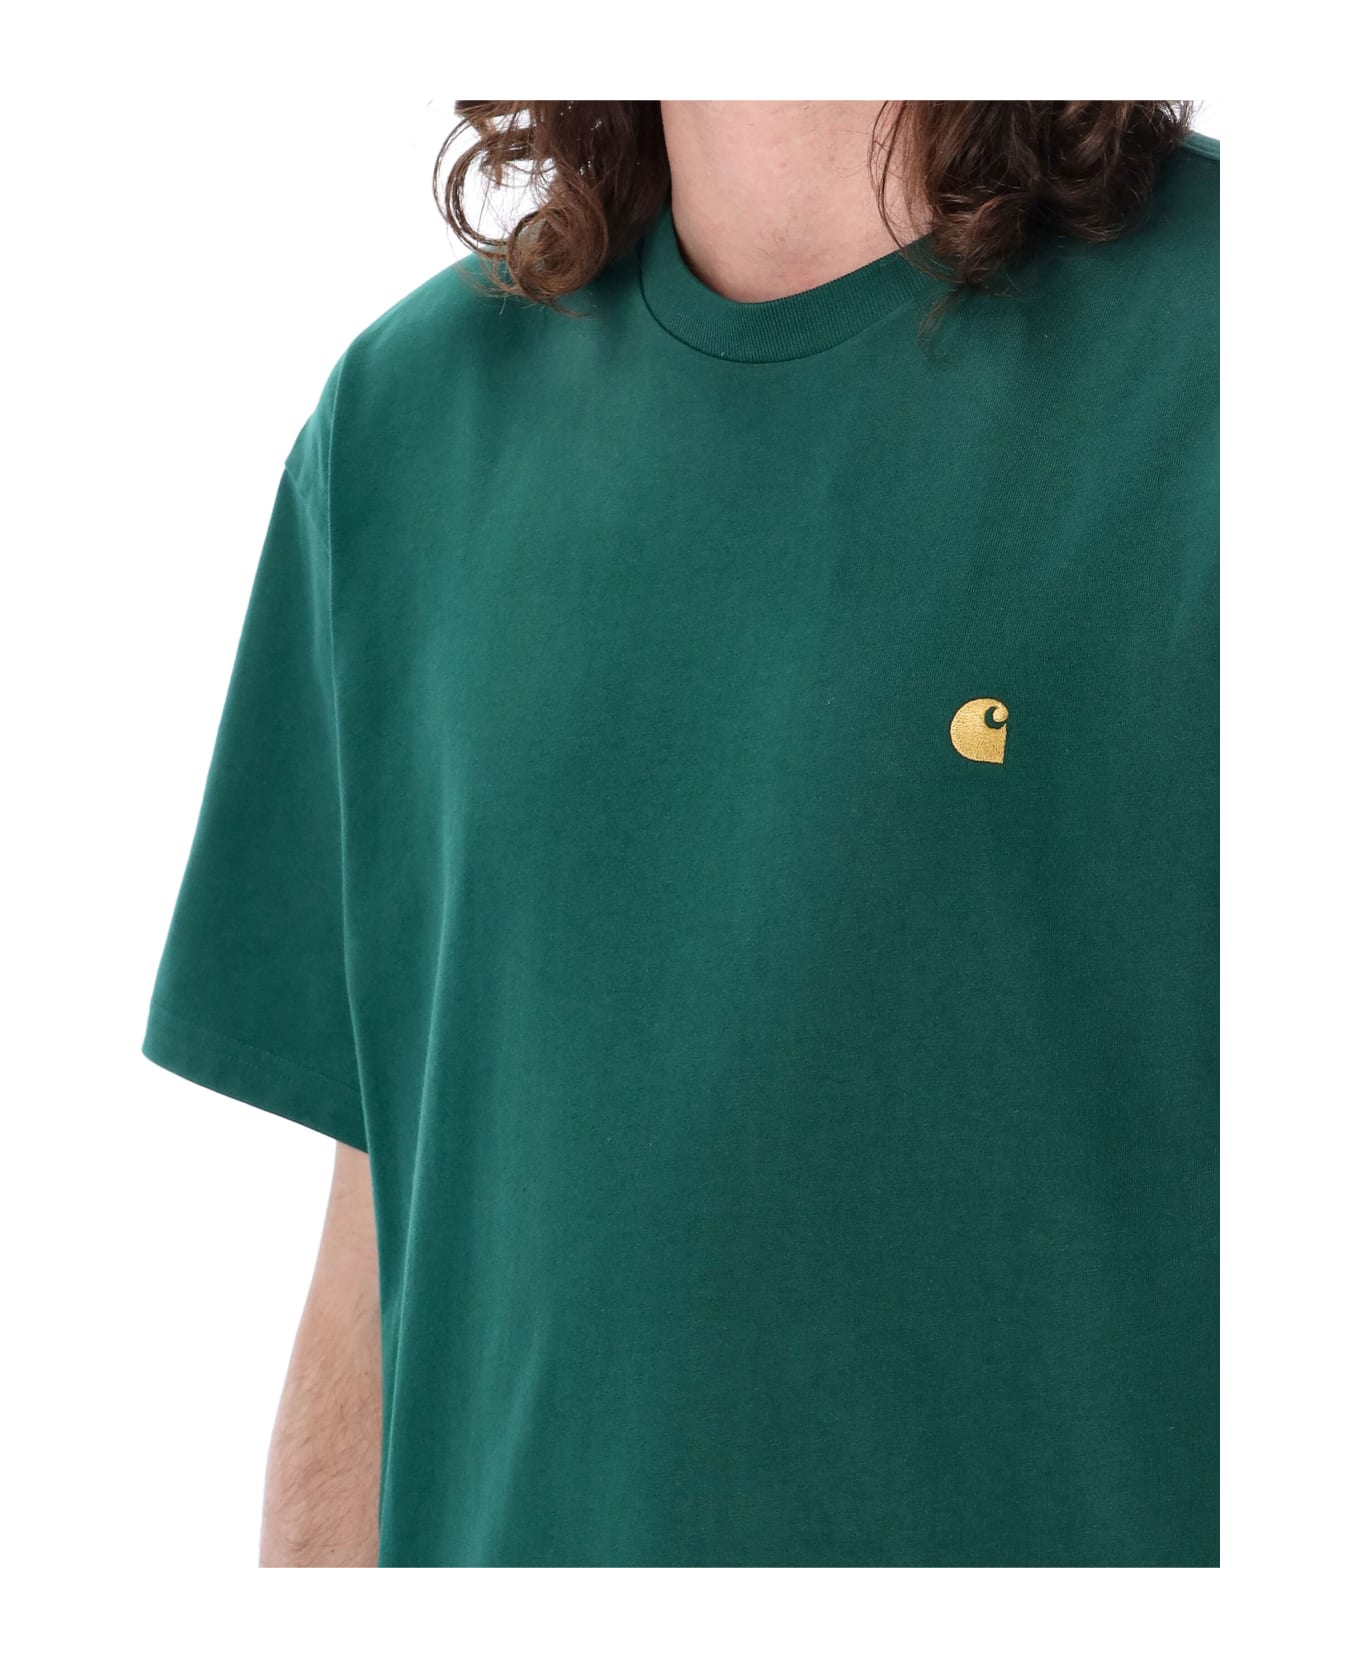 Carhartt Chase S/s T-shirt - CHERVIL/GOLD